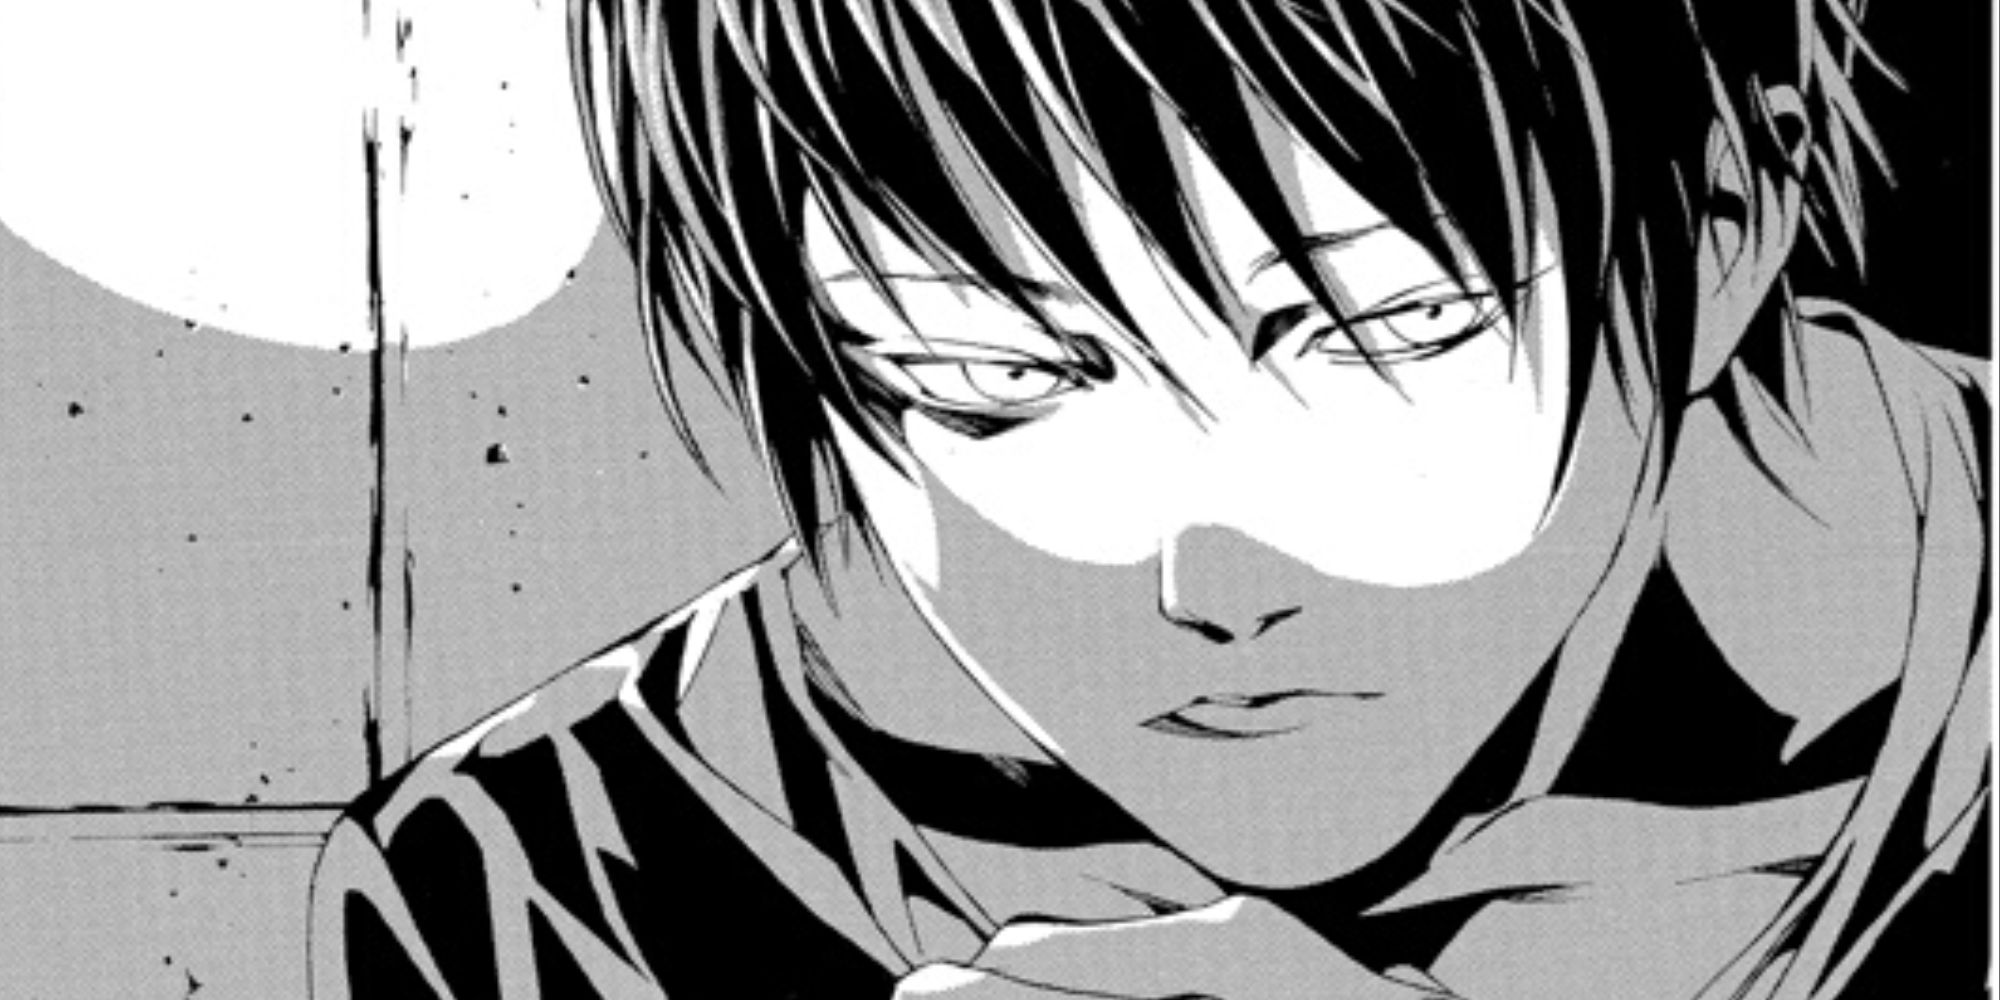 Kazuhiko in Multiple Personality Detective Psycho